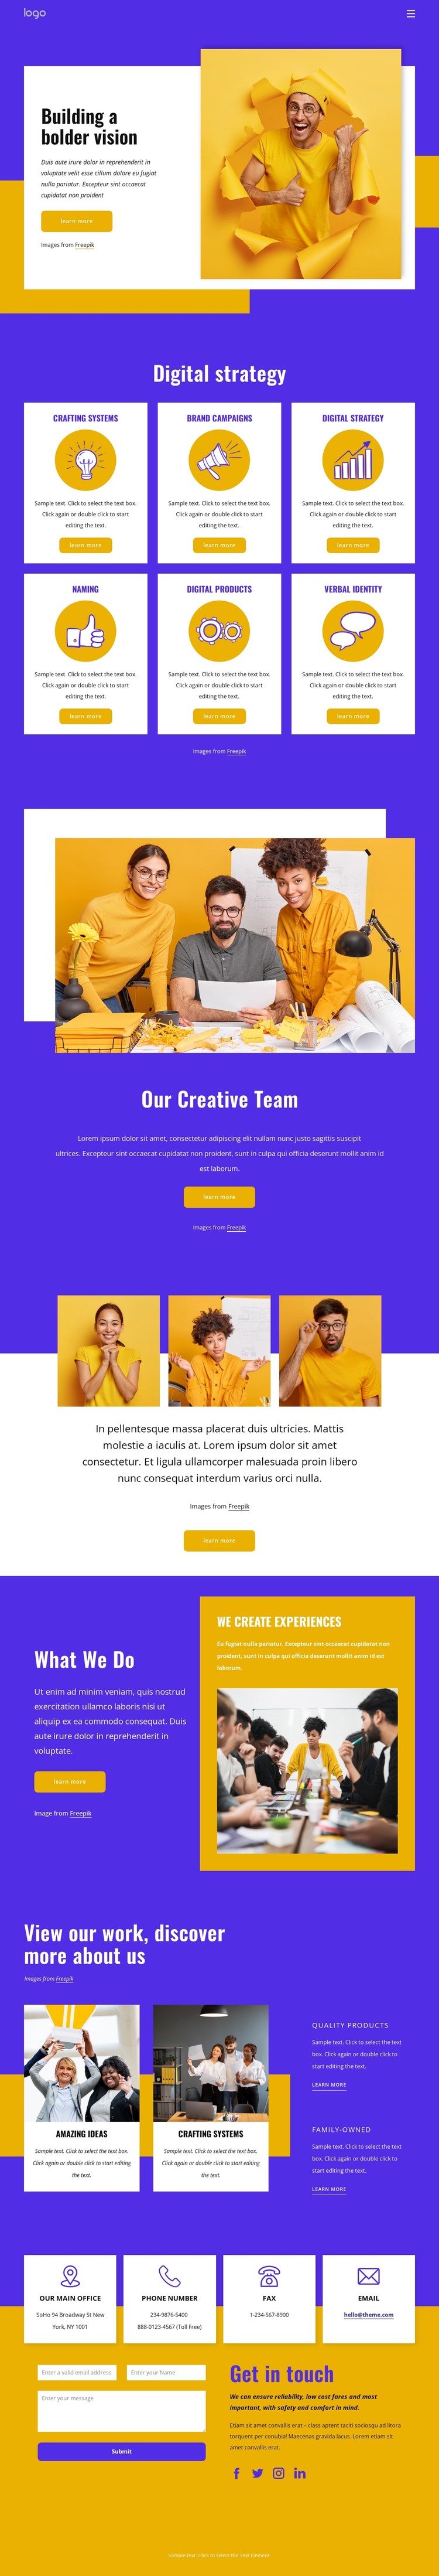 UX design and branding agency WordPress Theme